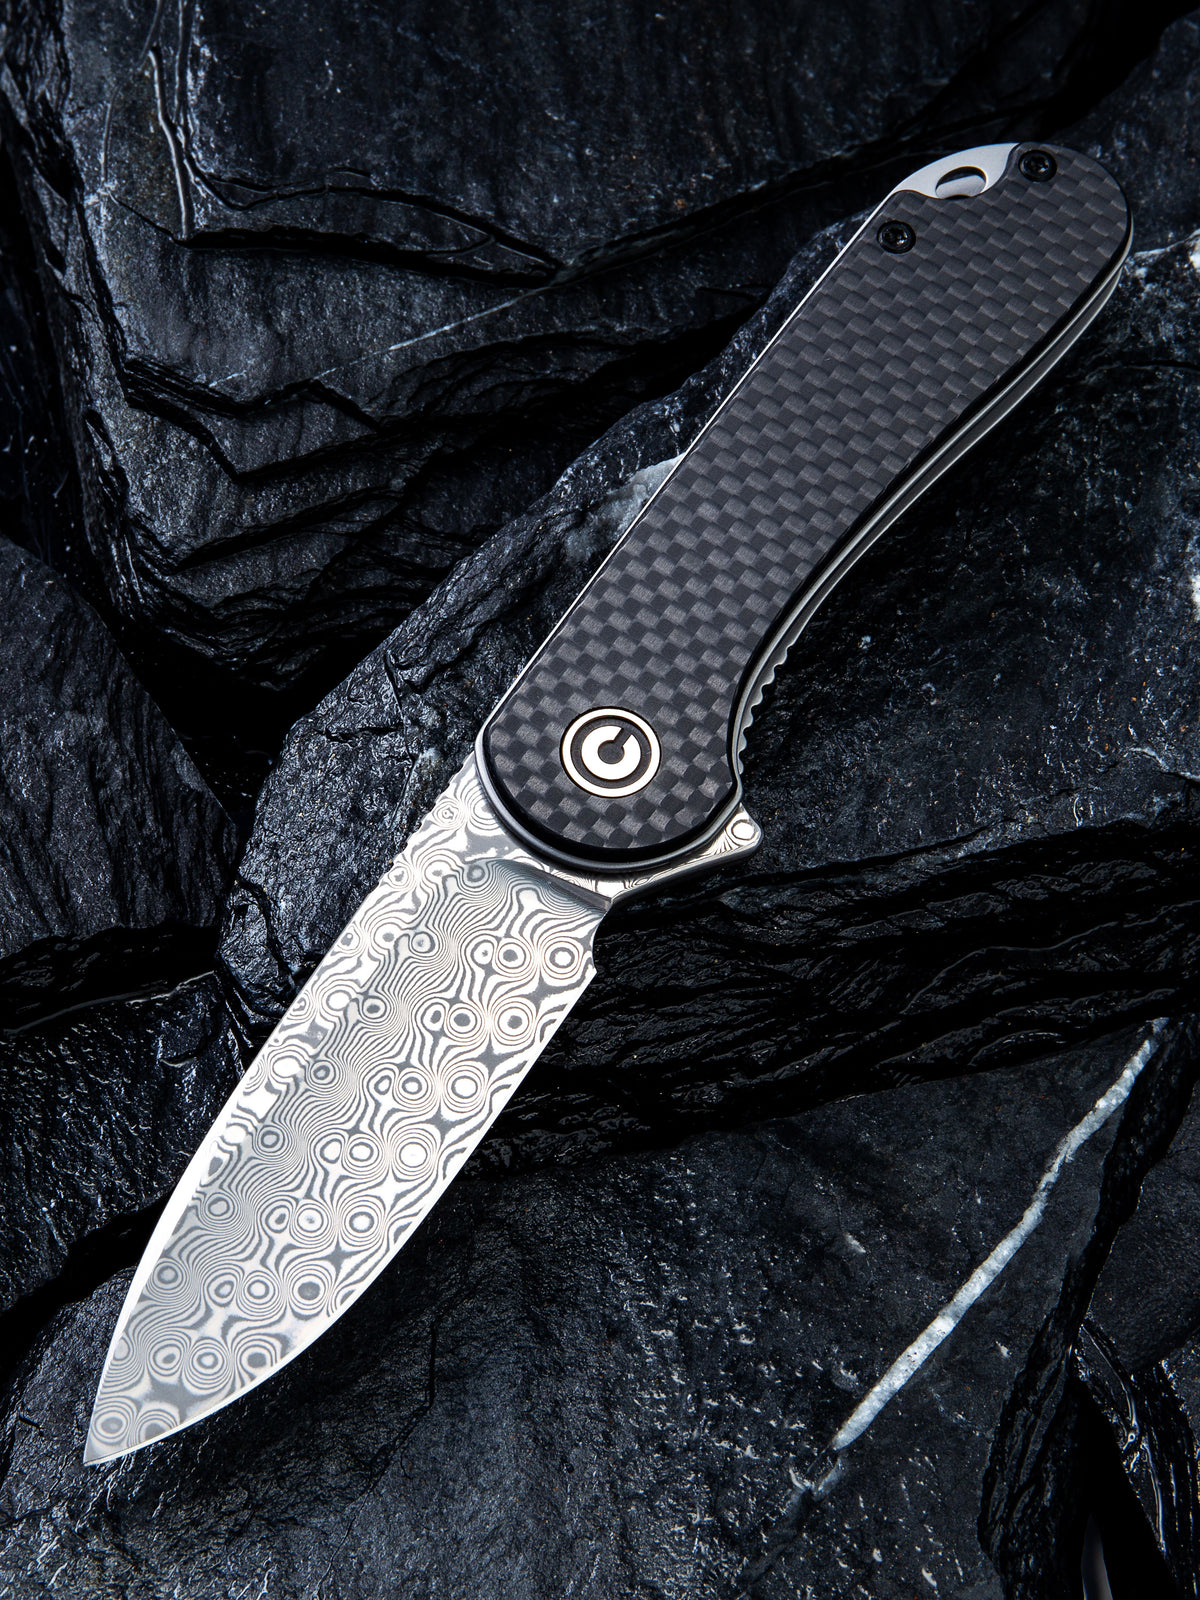 CIVIVI Elementum | Twill Carbon Fiber Overlay On Black G10 Handle Gray S/S Liner Damascus Blade